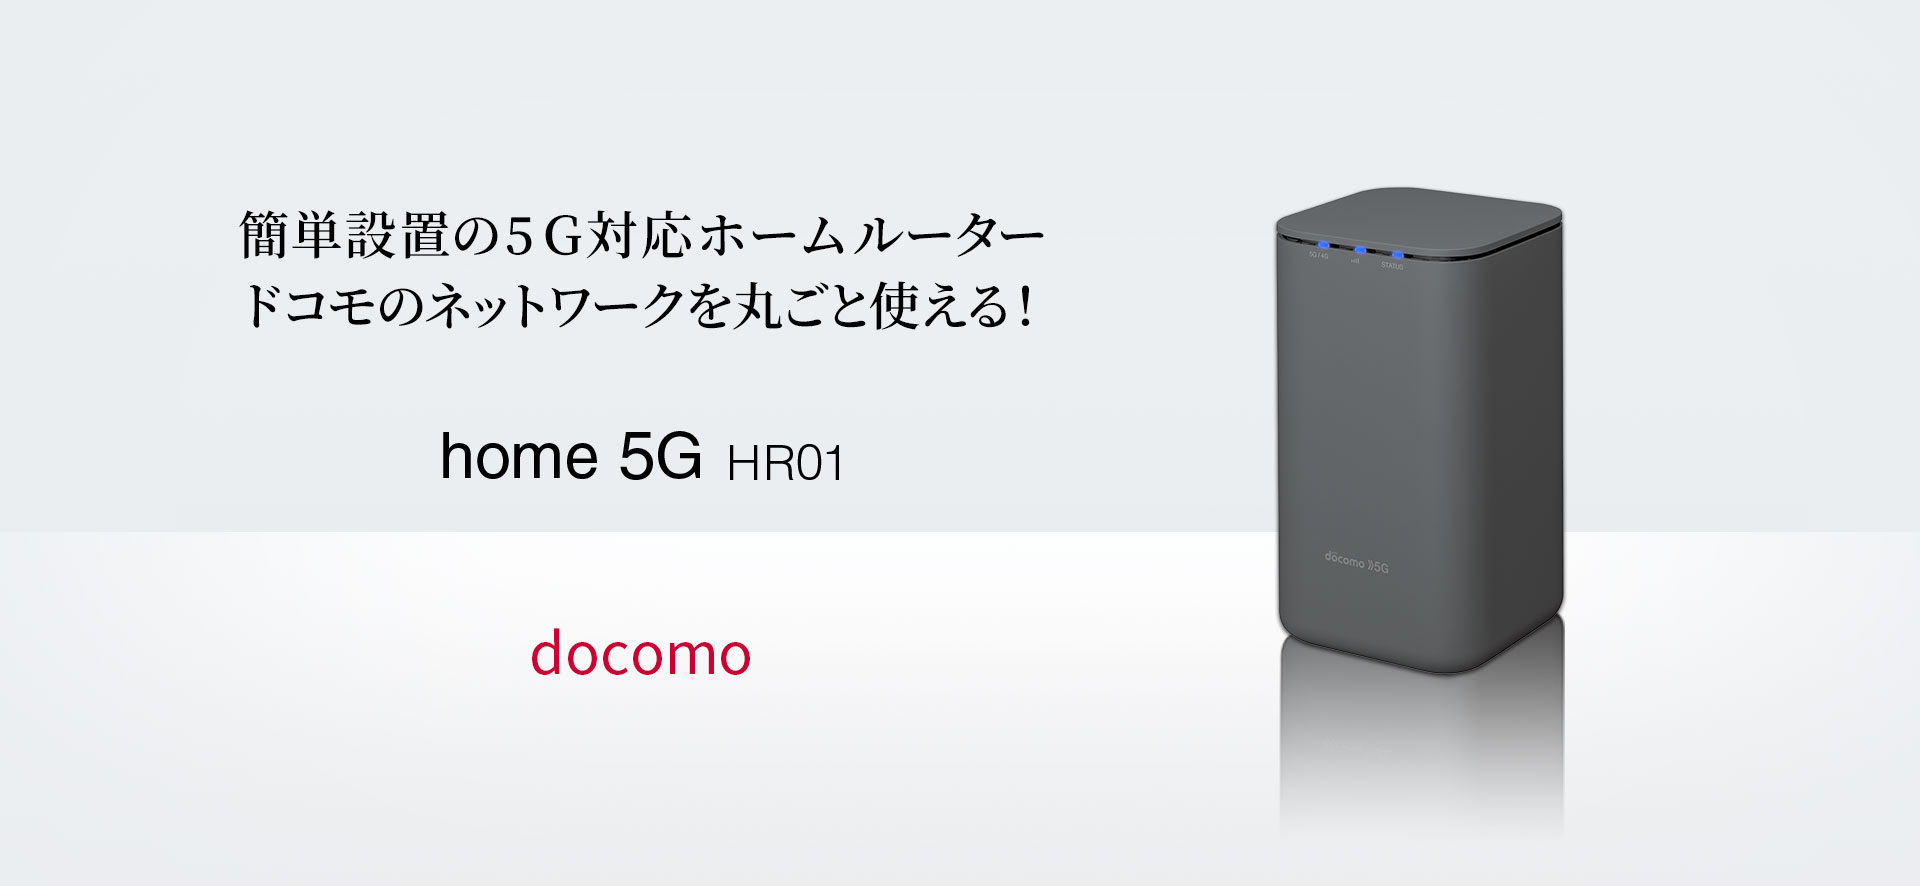 NTTドコモ SHARP home 5G HR01 ダークグレー - rehda.com